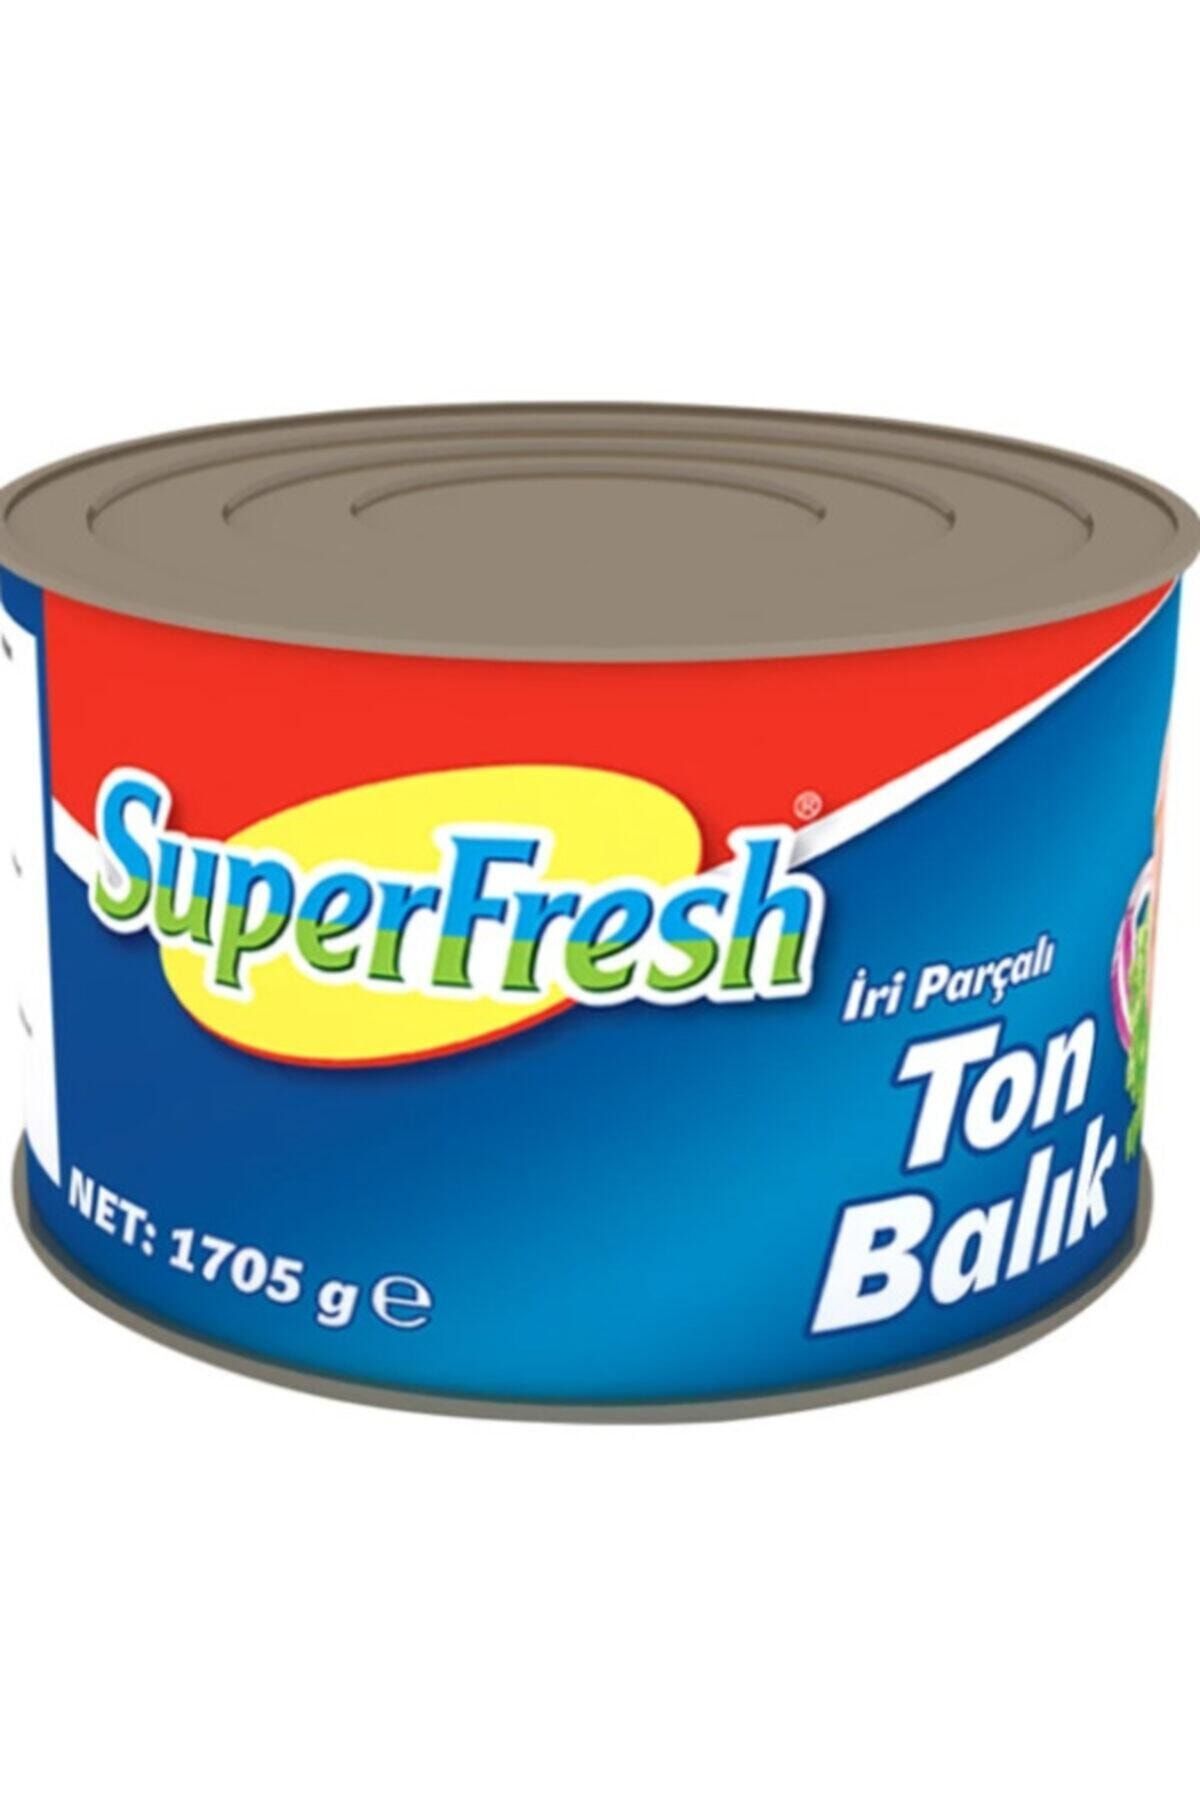 SuperFresh Iri Parçalı Ton Balığı 1705 gr